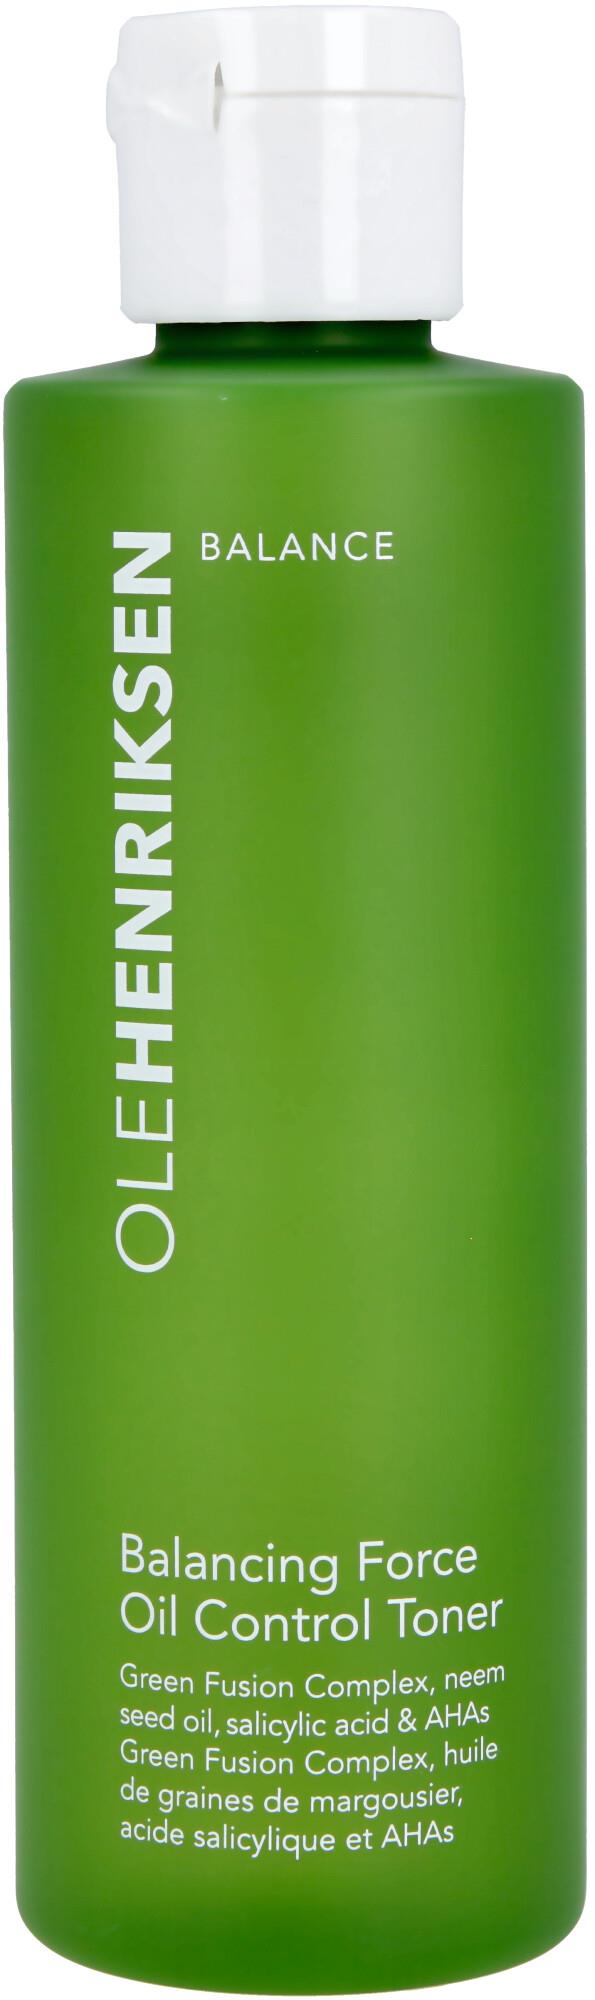 Ole Henriksen Balance Balancing Force Oil Control Toner 190 ml lyko.com